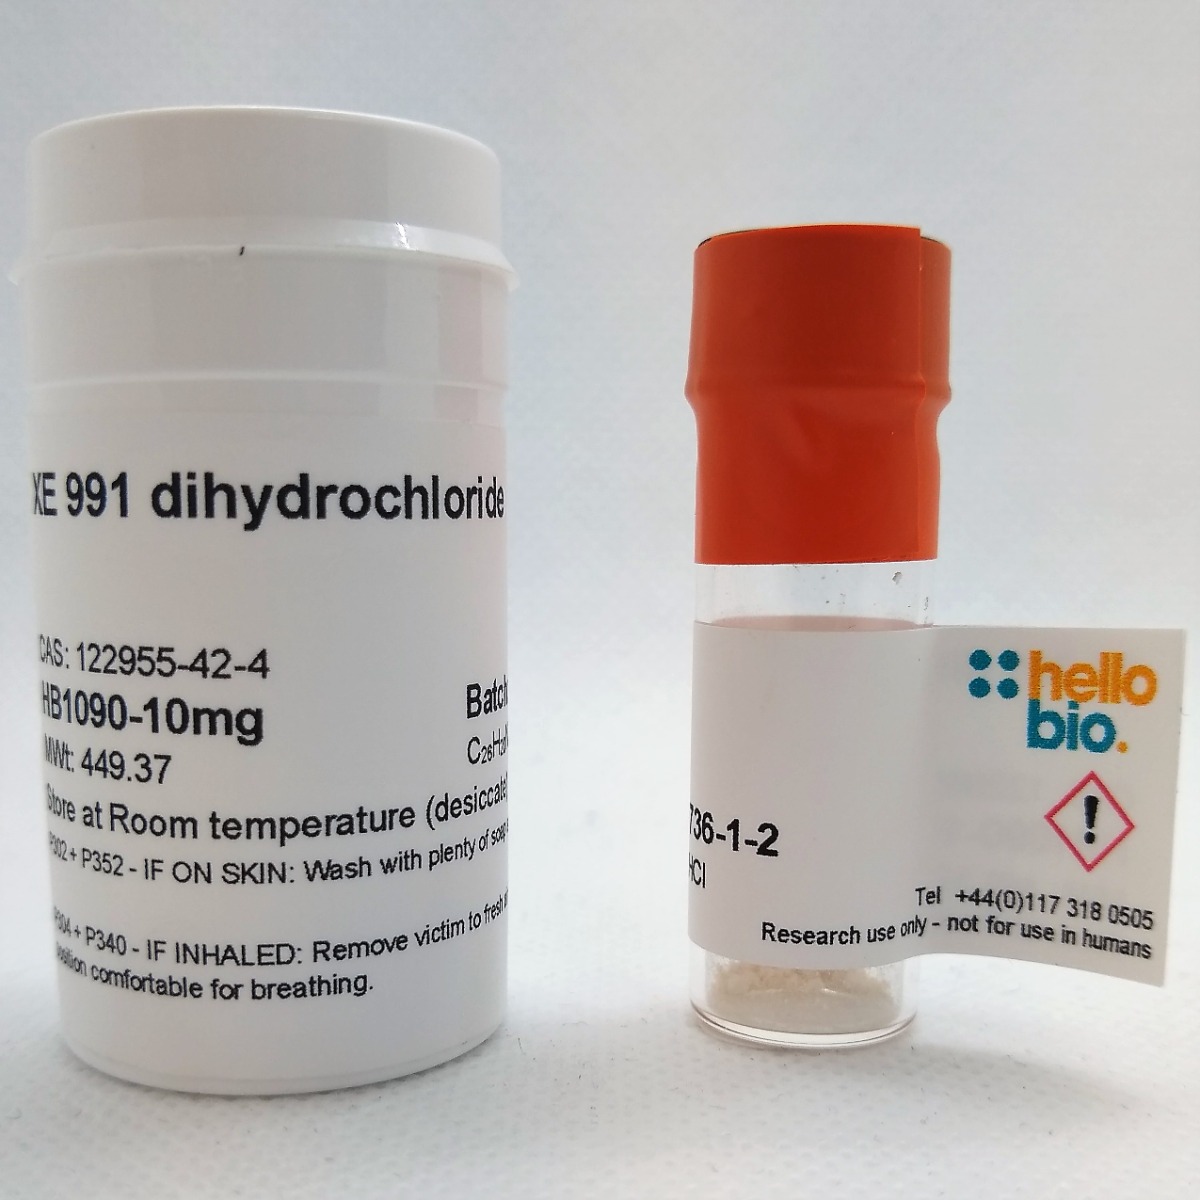 XE 991 dihydrochloride product vial image | Hello Bio